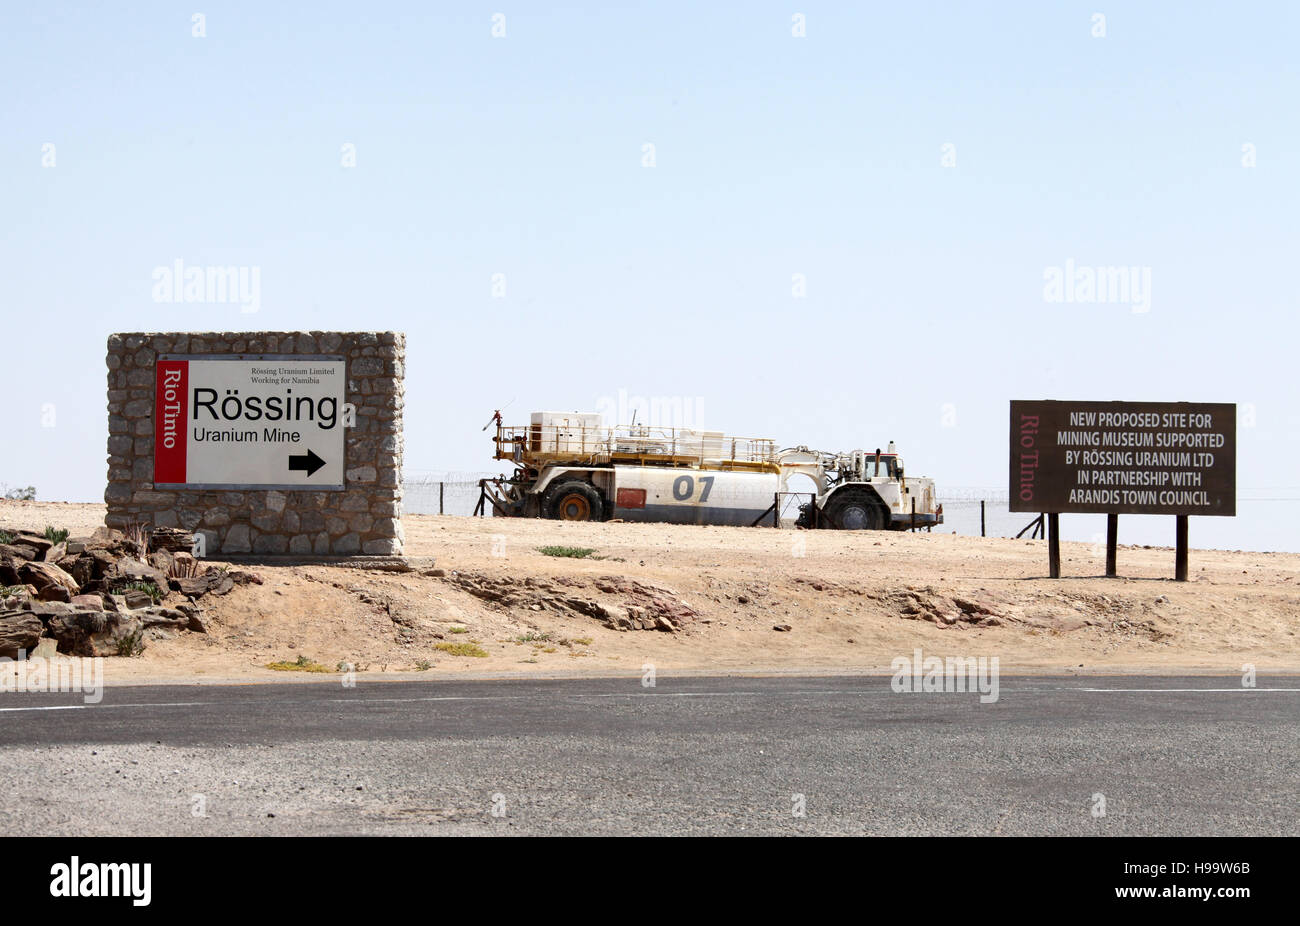 Rossing Uranium Mine near Swakopmund in Namibia Stock Photo